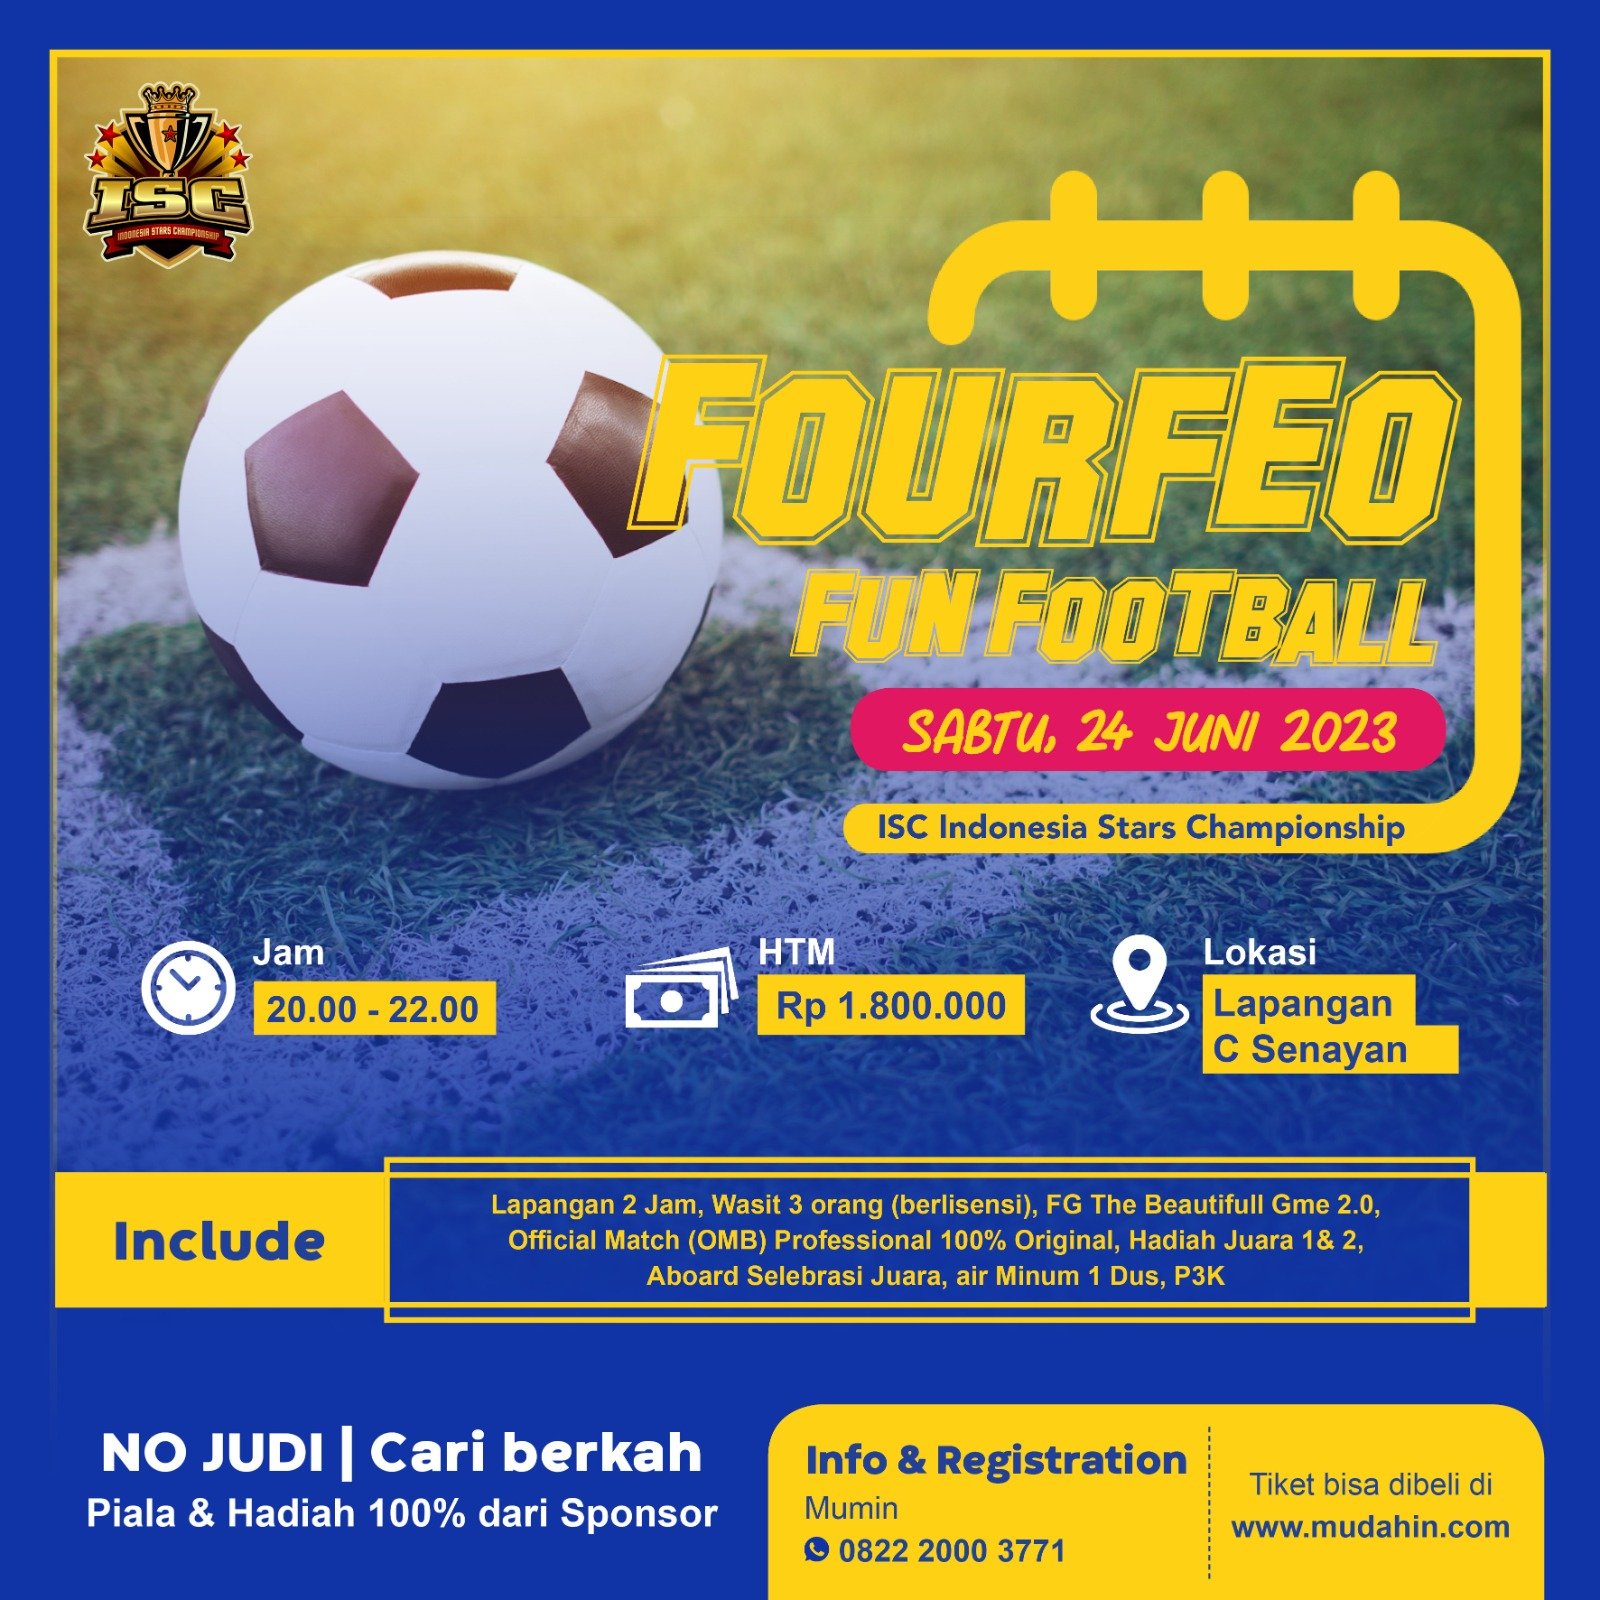 ISC Fourfeo Fun Football Lapangan C Senayan, Sabtu 24 Juni 2023